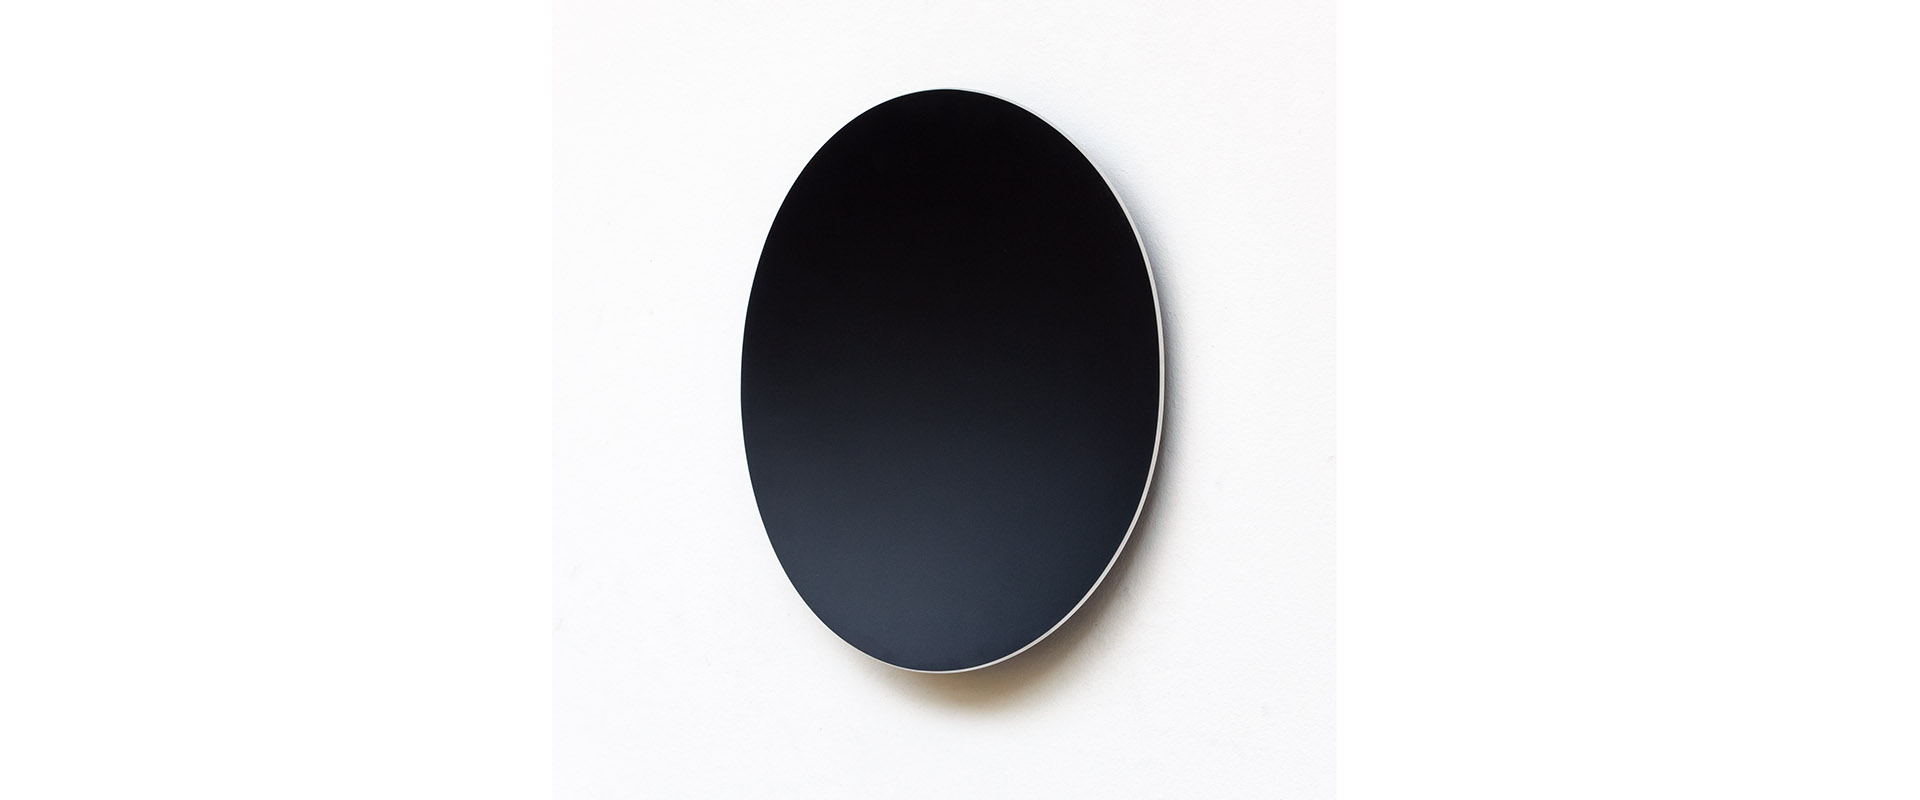 Ohne Titel - 2020, WVZ 734, Aluminium, eloxiert, schwarz, 37 x 31 x 6 cm